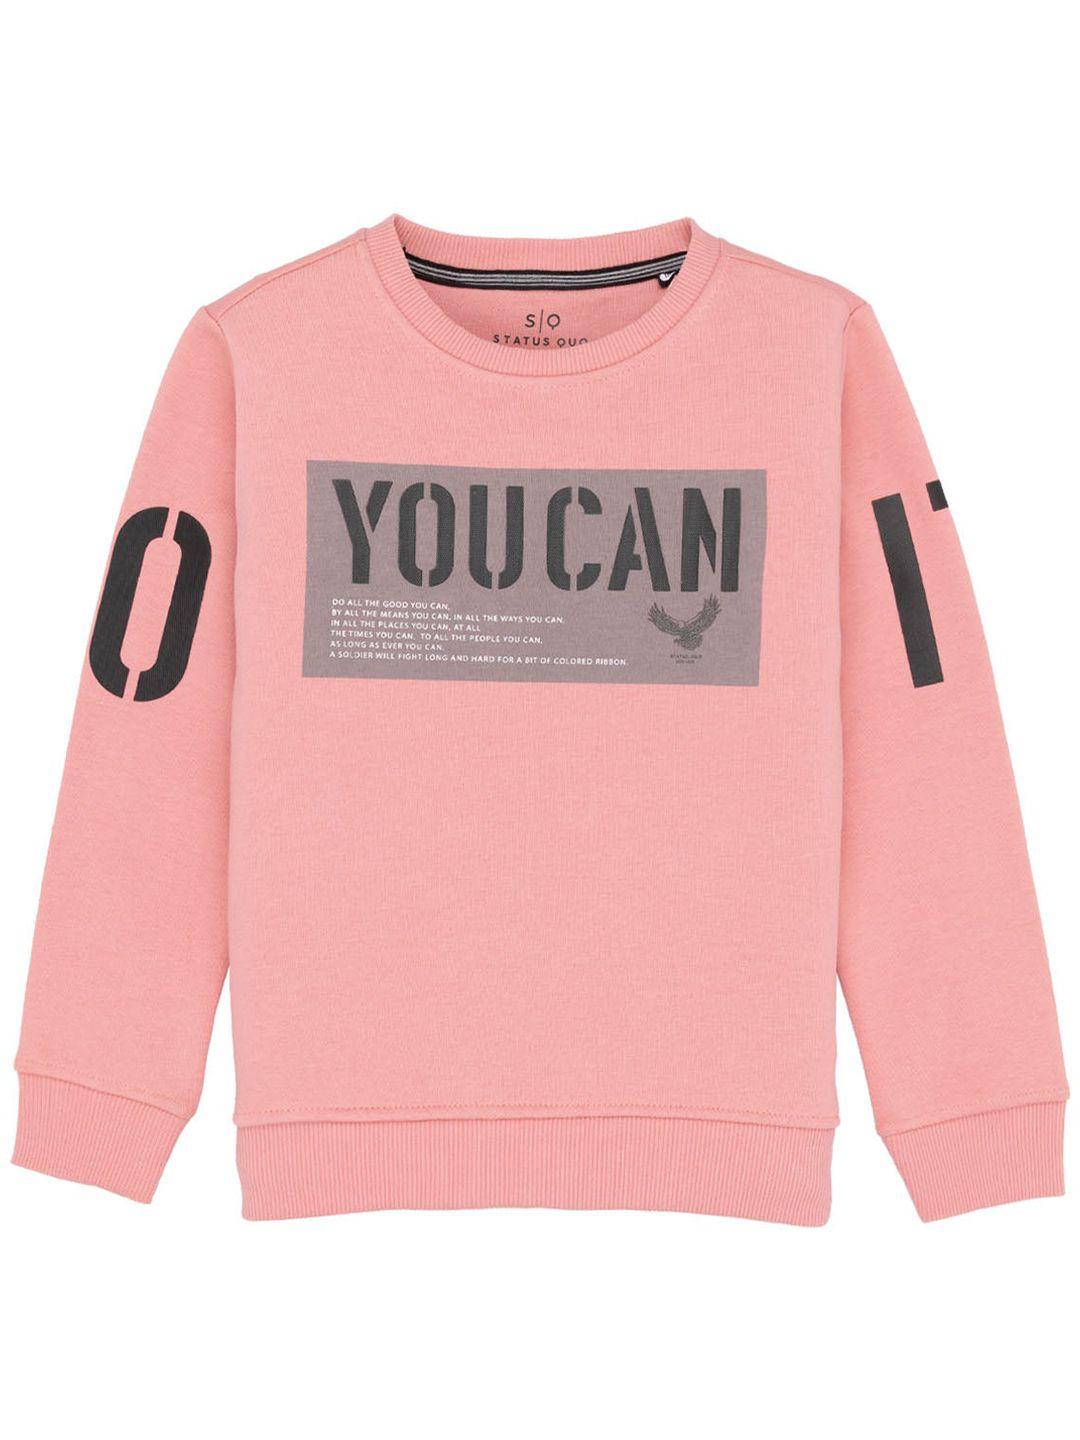 status quo boys typography printed cotton sweatshirt